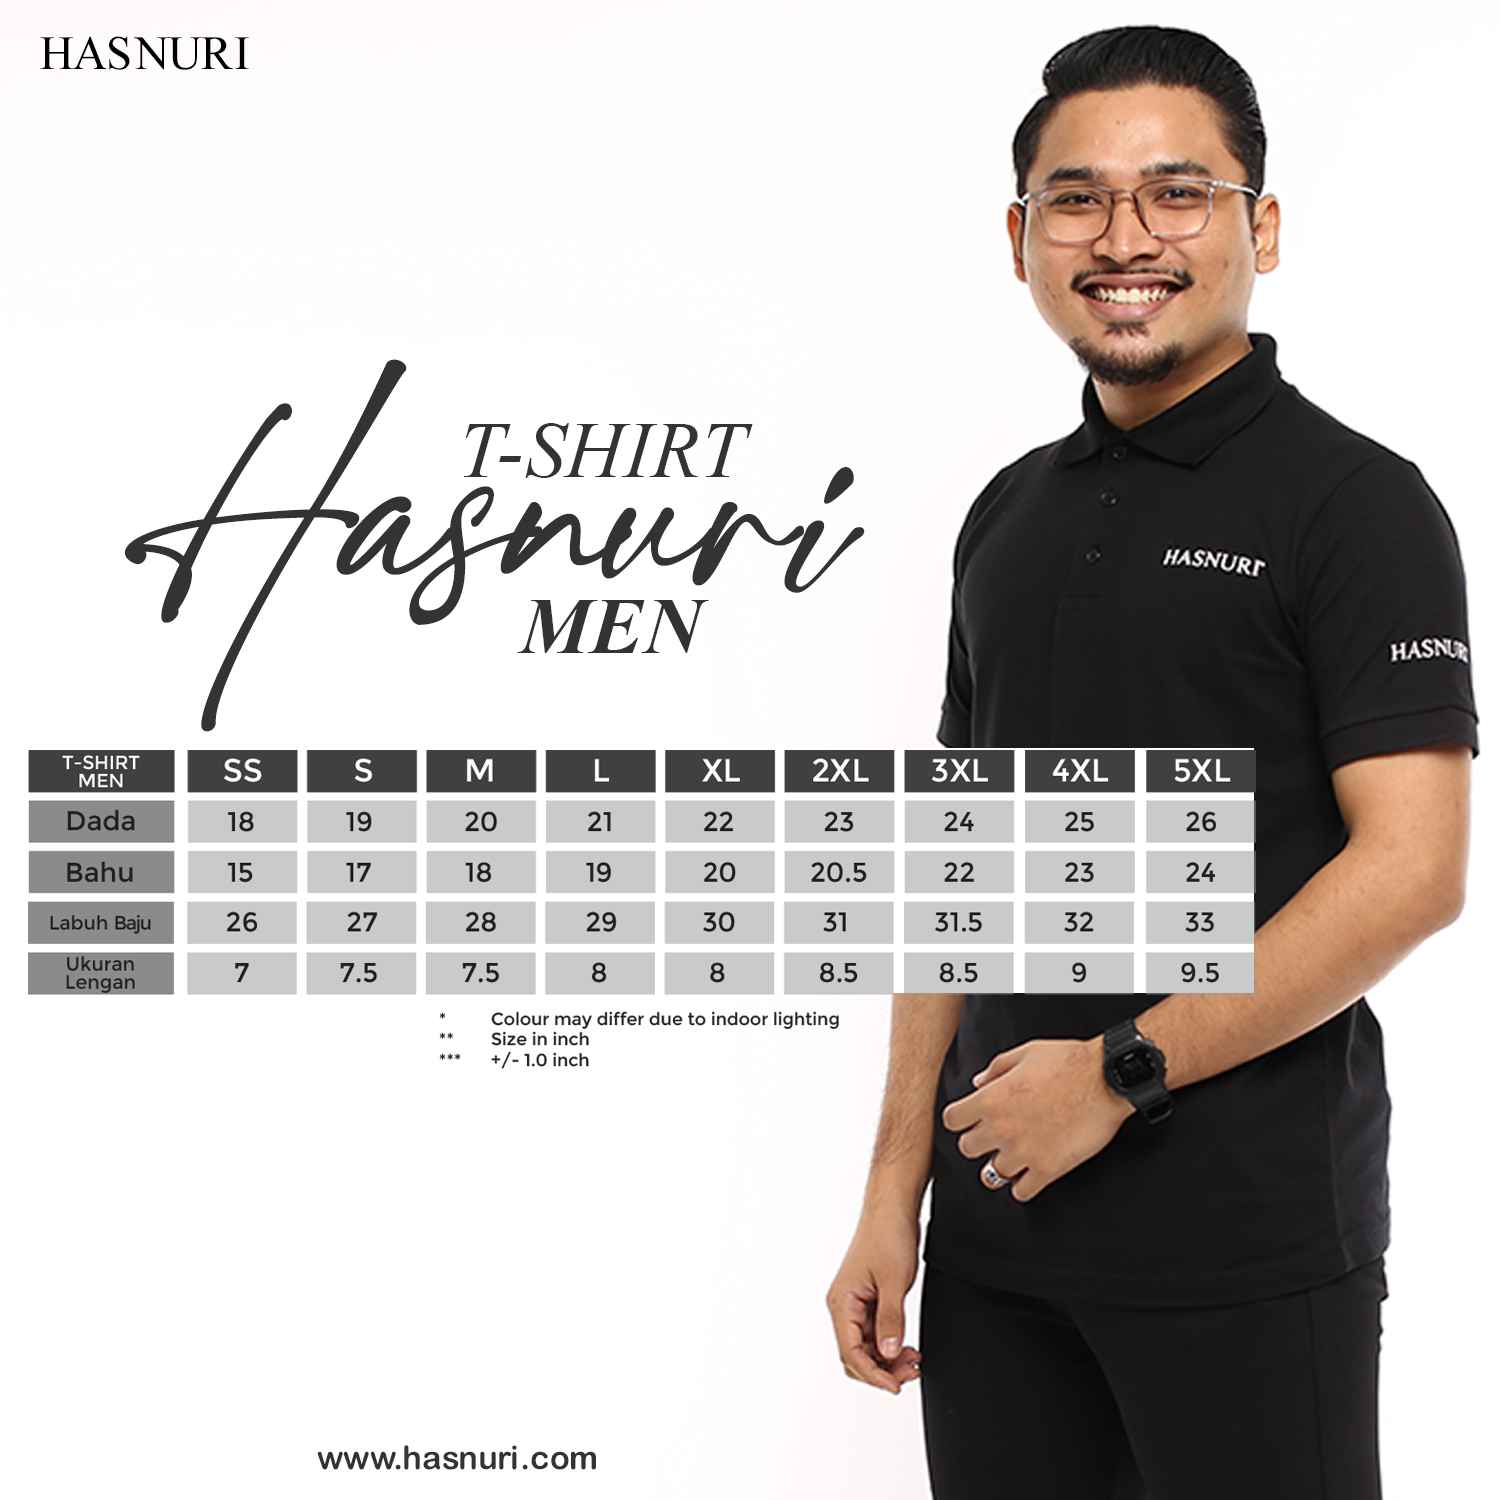 T-shirt Hasnuri Men - Black